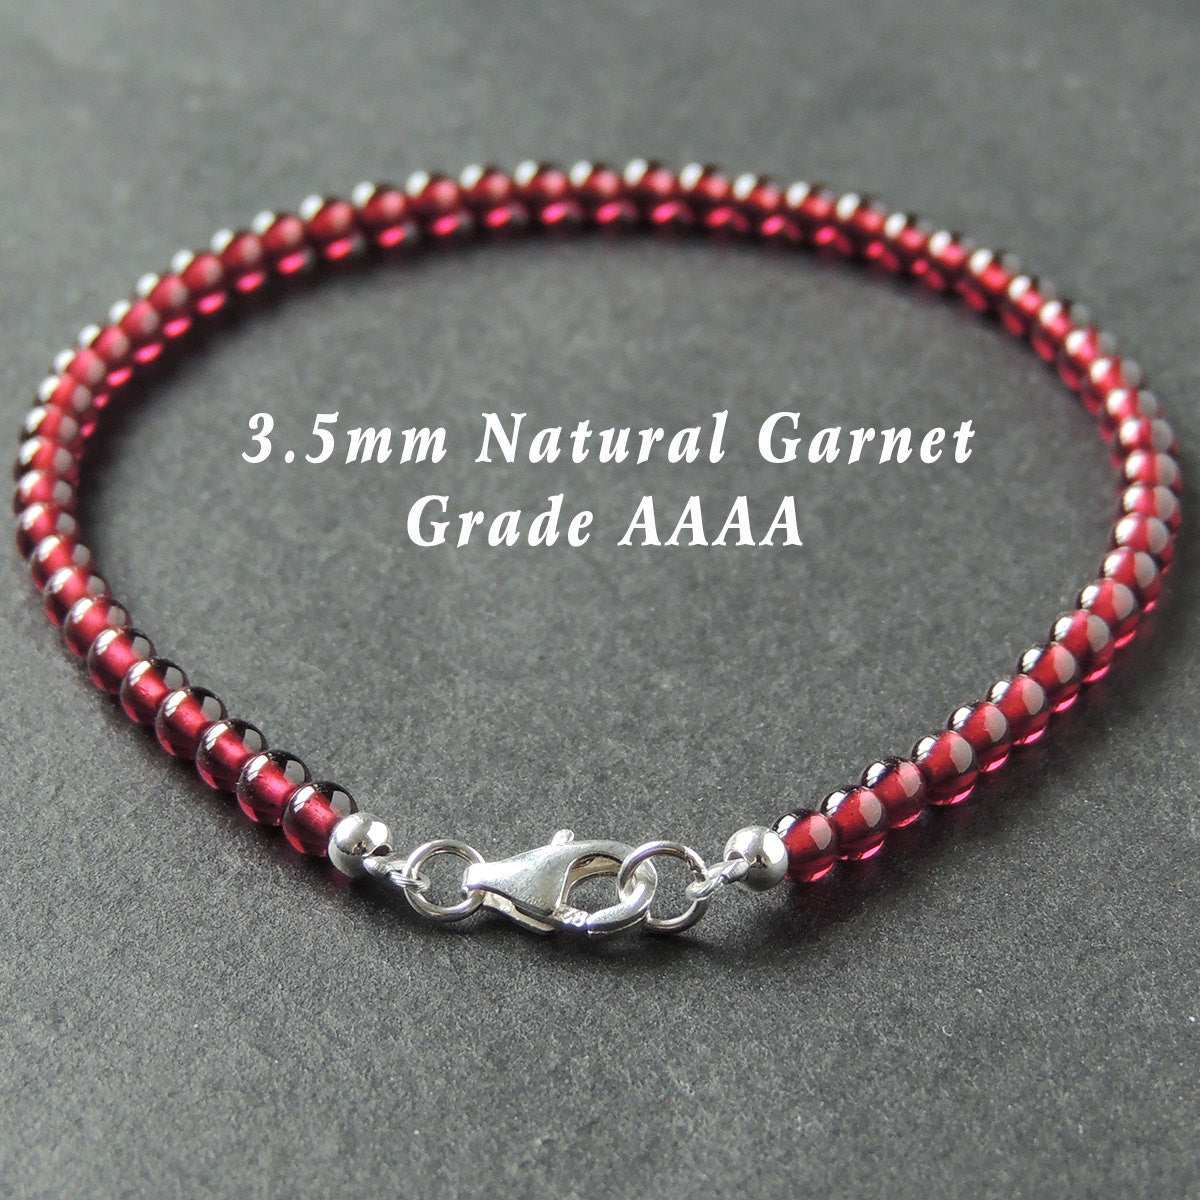 3.5mm Grade AAAA Garnet Healing Gemstone Bracelet with S925 Sterling Silver Spacer Beads & Clasp - Handmade by Gem & Silver BR710